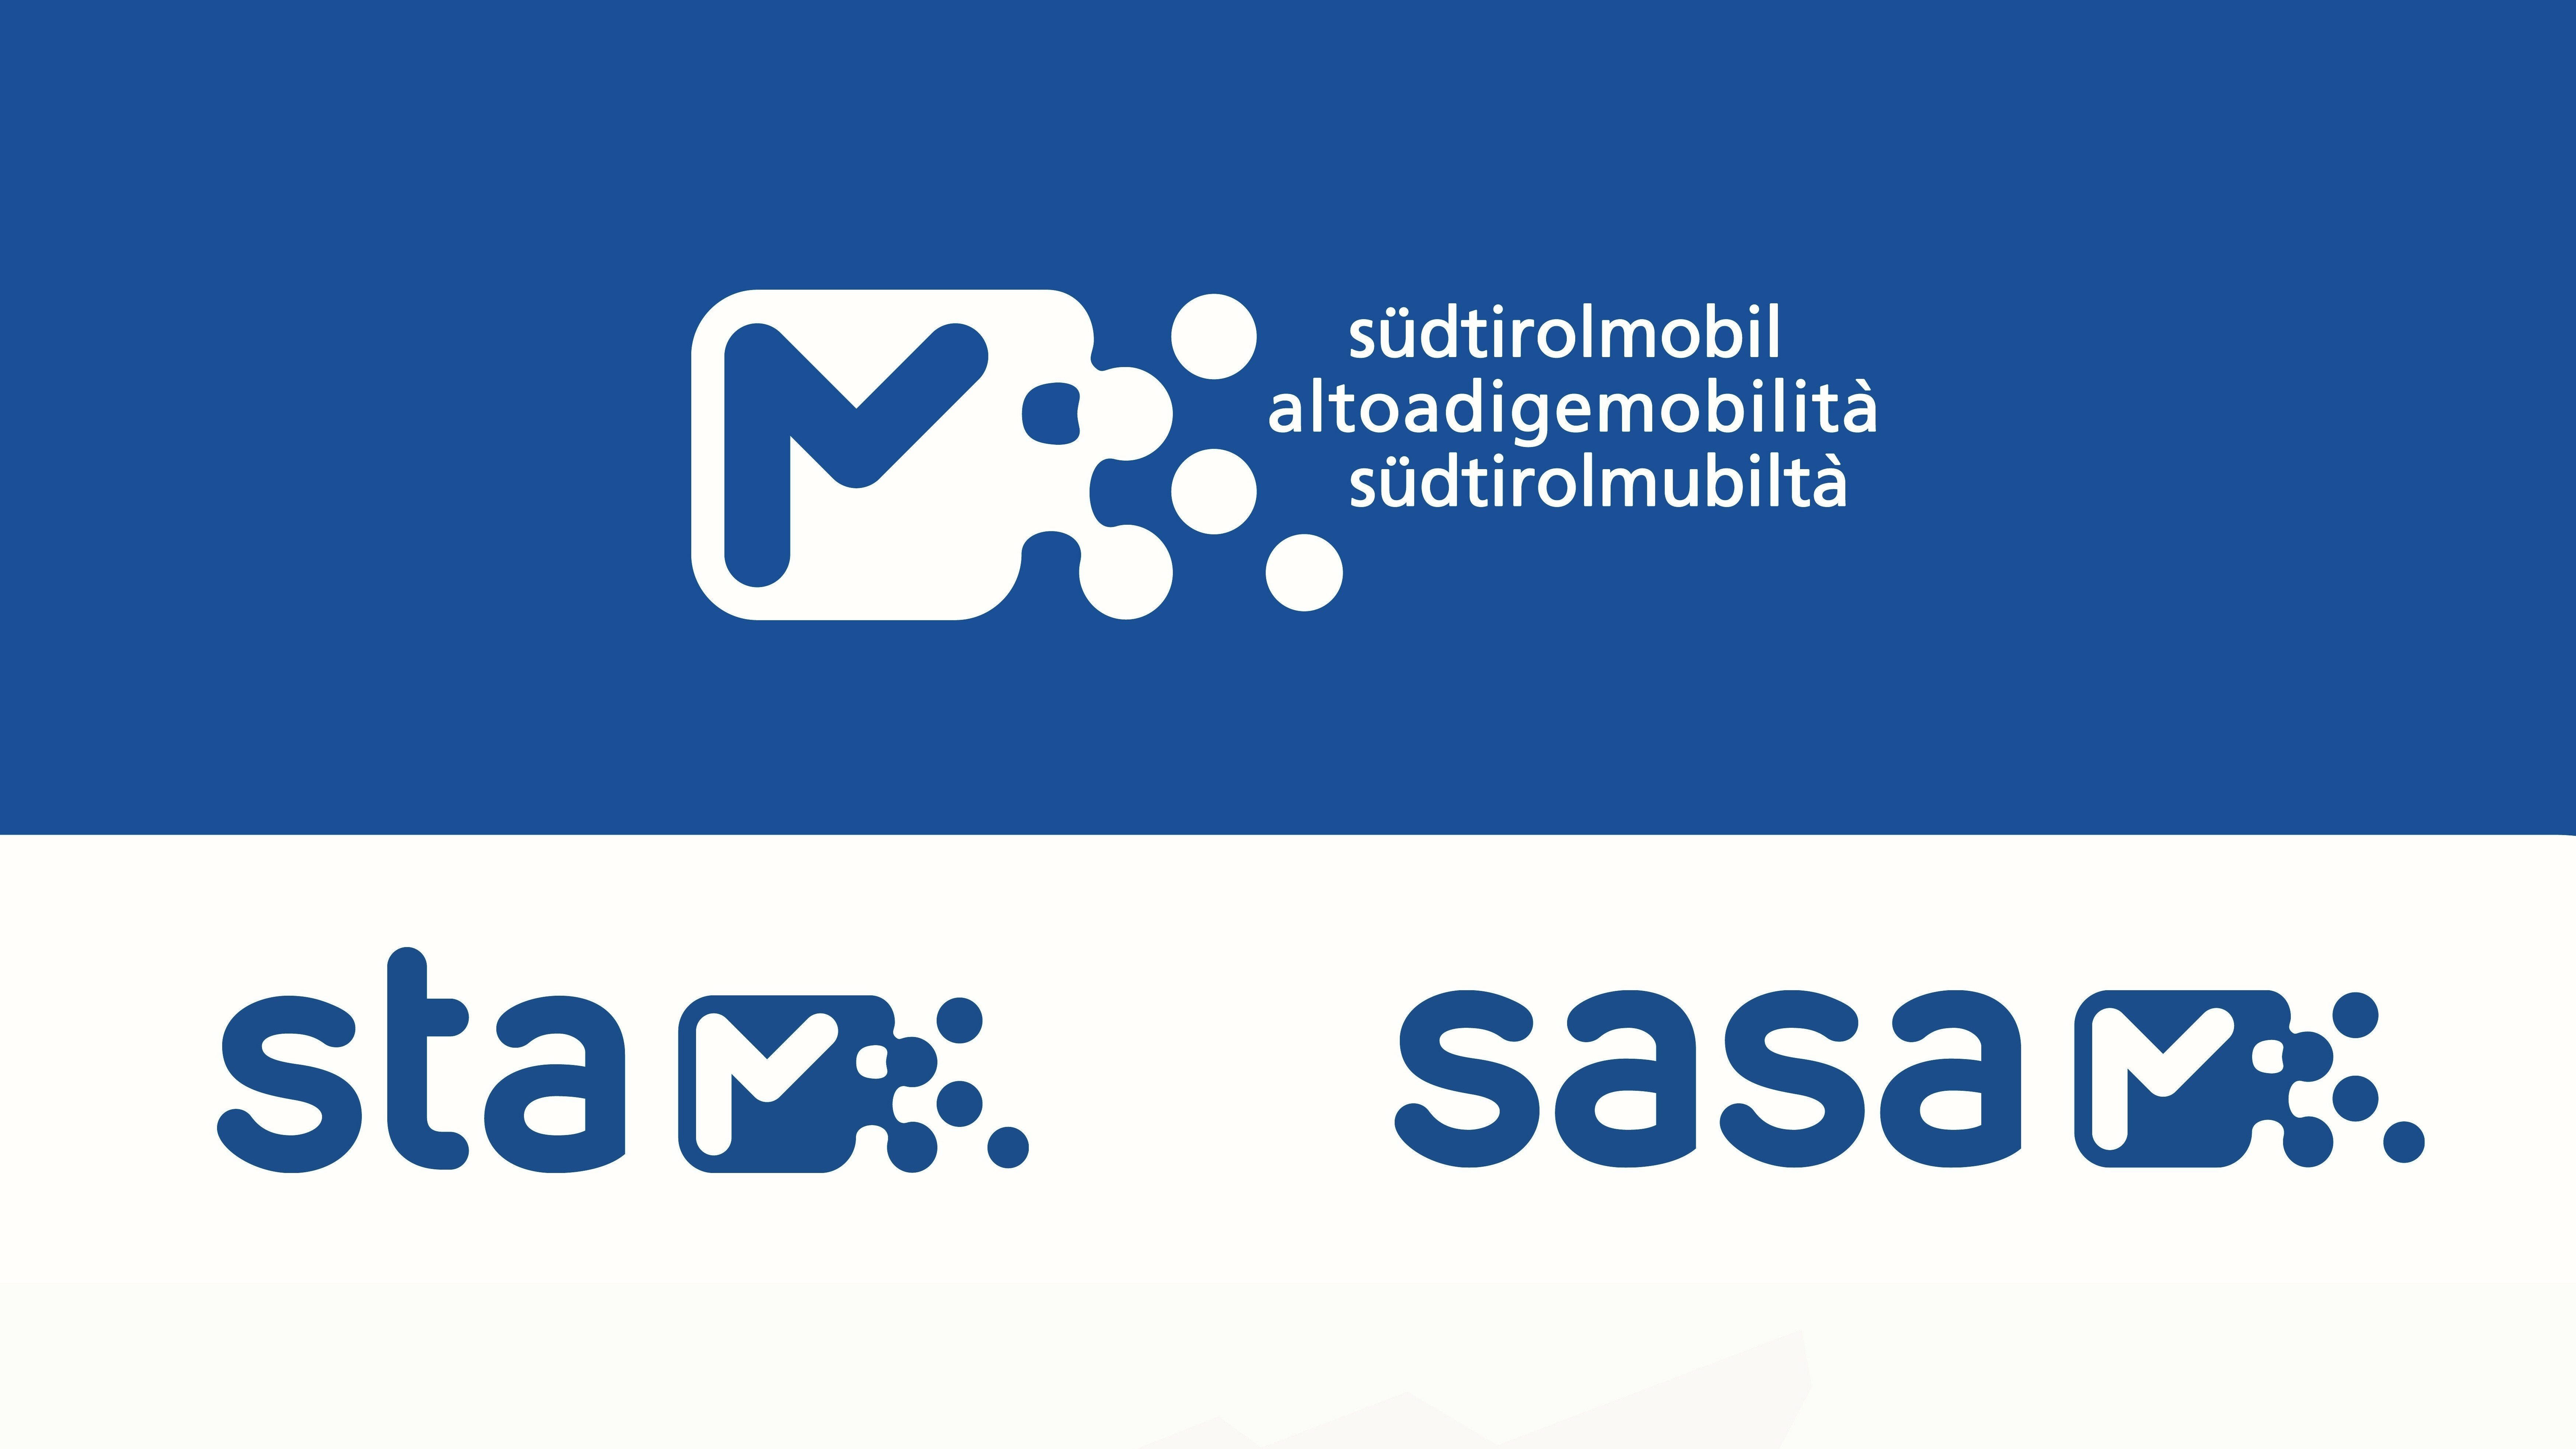 The new brand südtirolmobil for STA and SASA